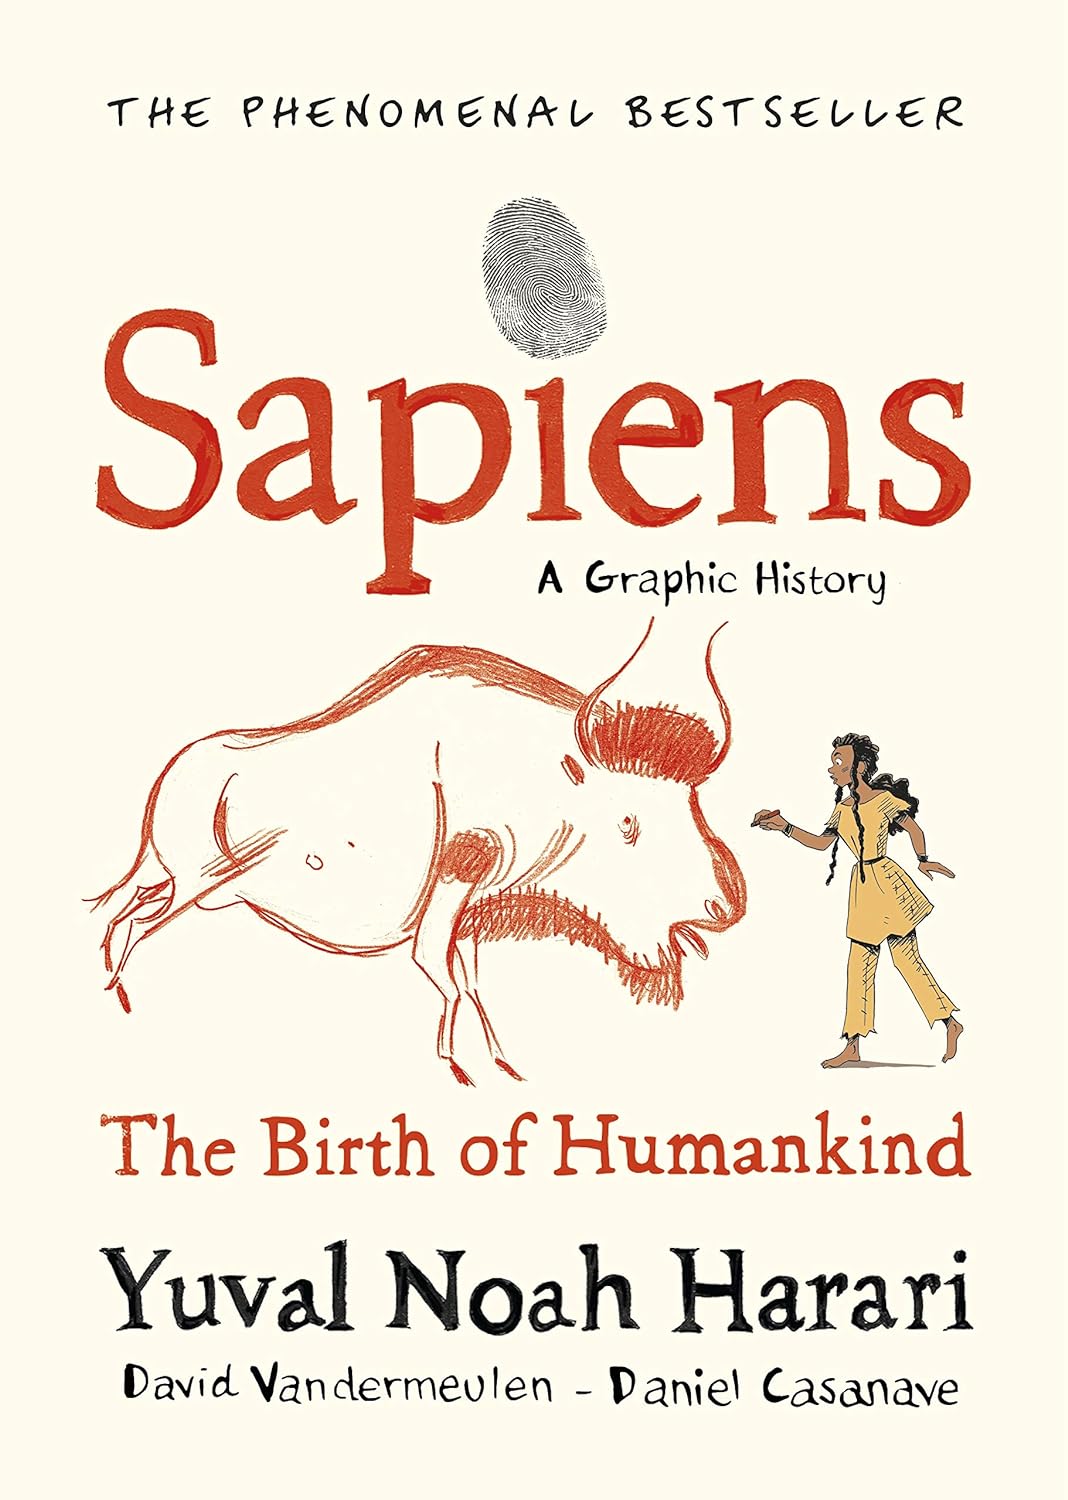 Sapiens: A Graphic History, Volume 1 by Yuval Noah Harari (Author), David Vandermeulen (Author), Daniel Casanave (Illustrator)